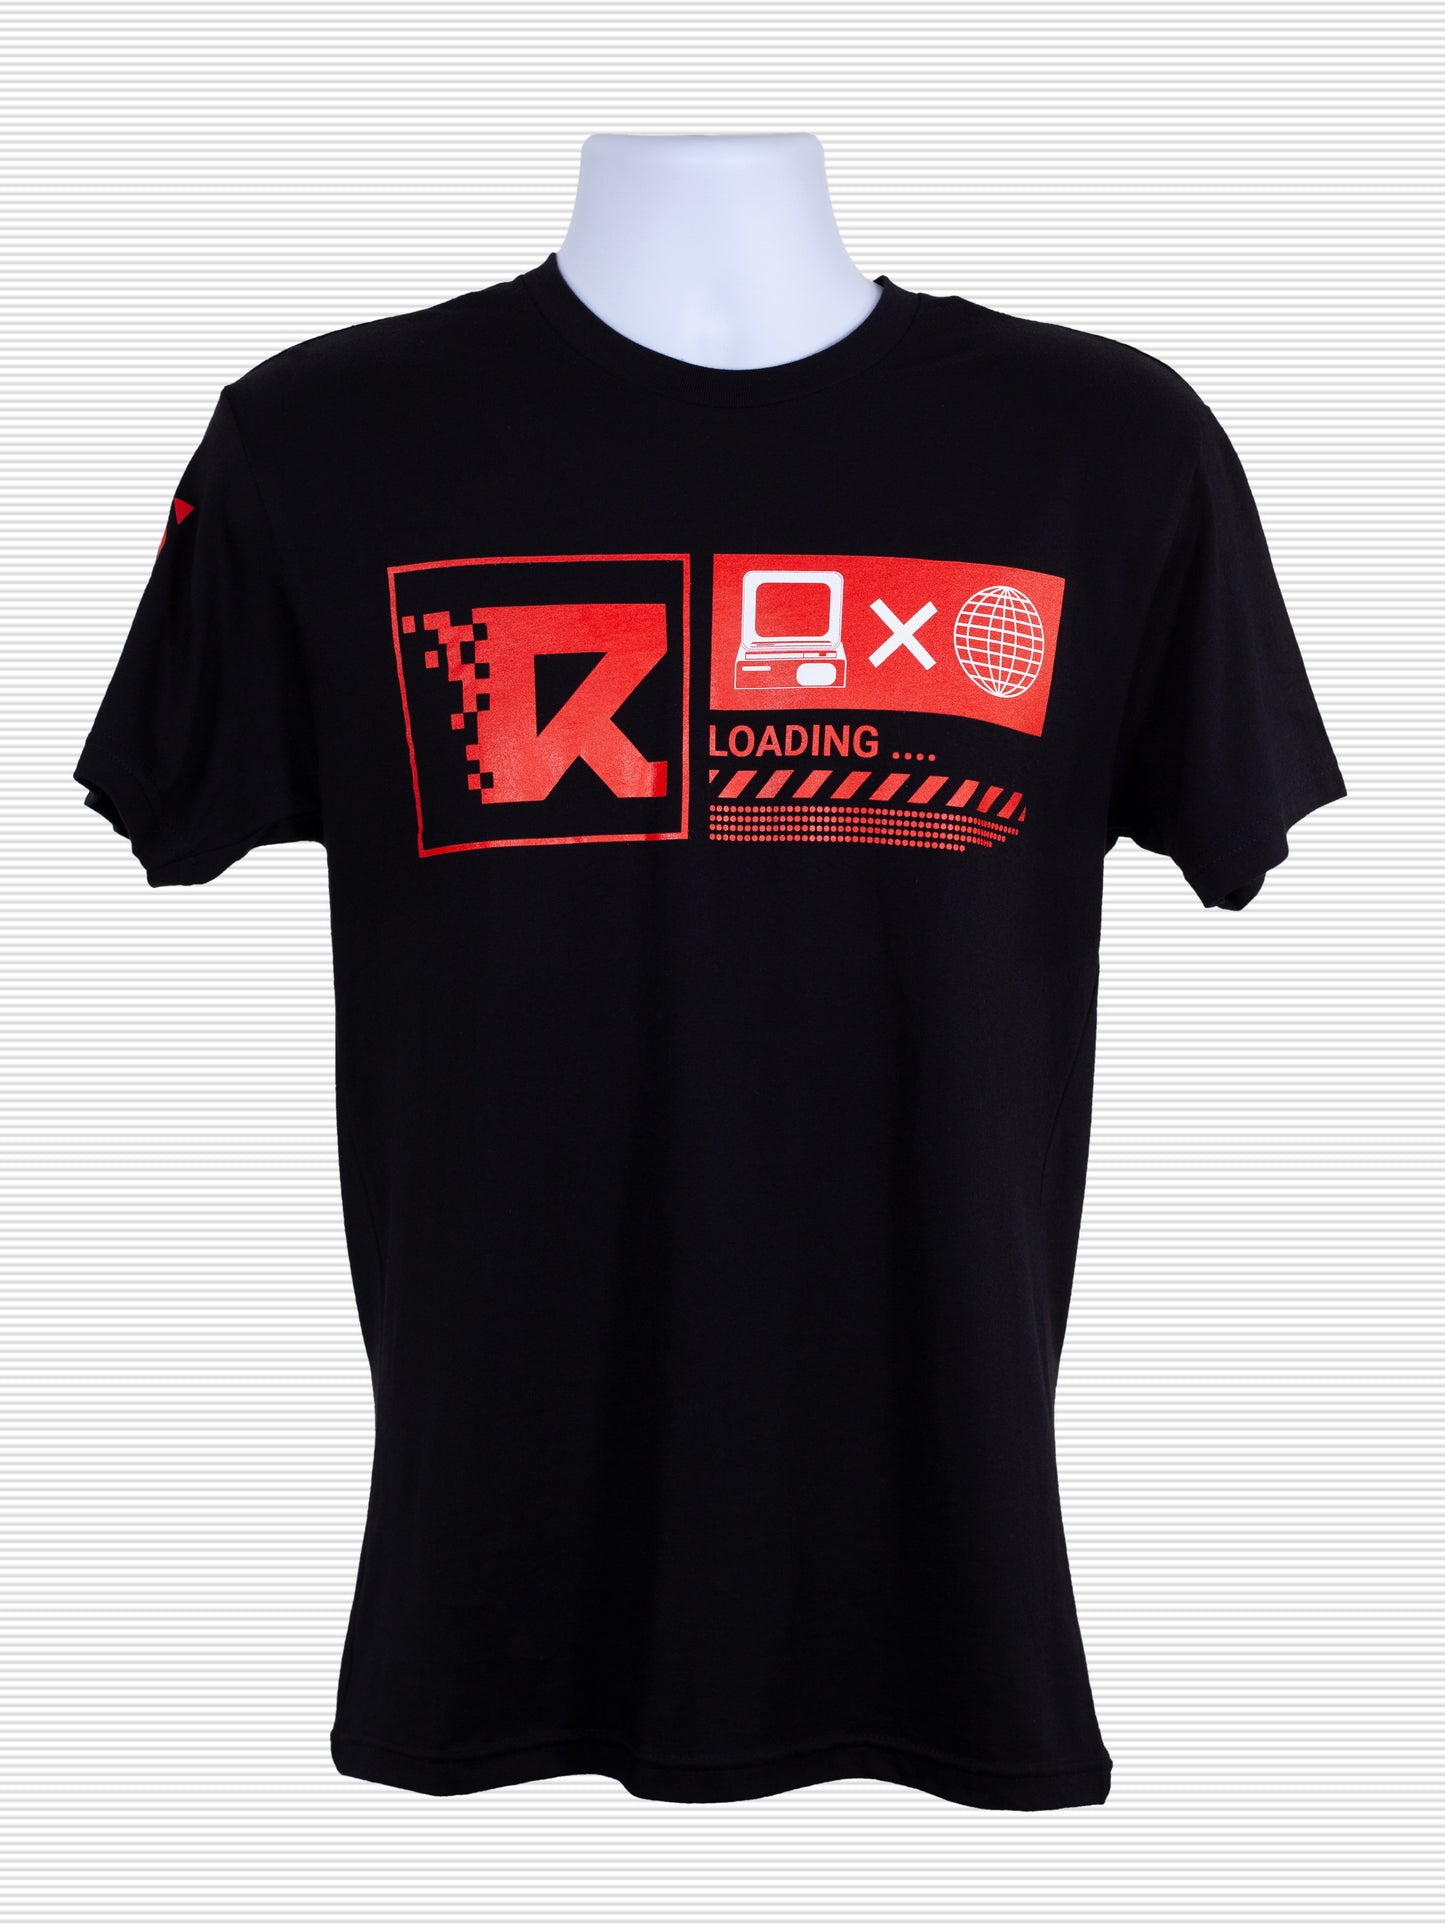 Retroware Cyberpunk Premium T-Shirt